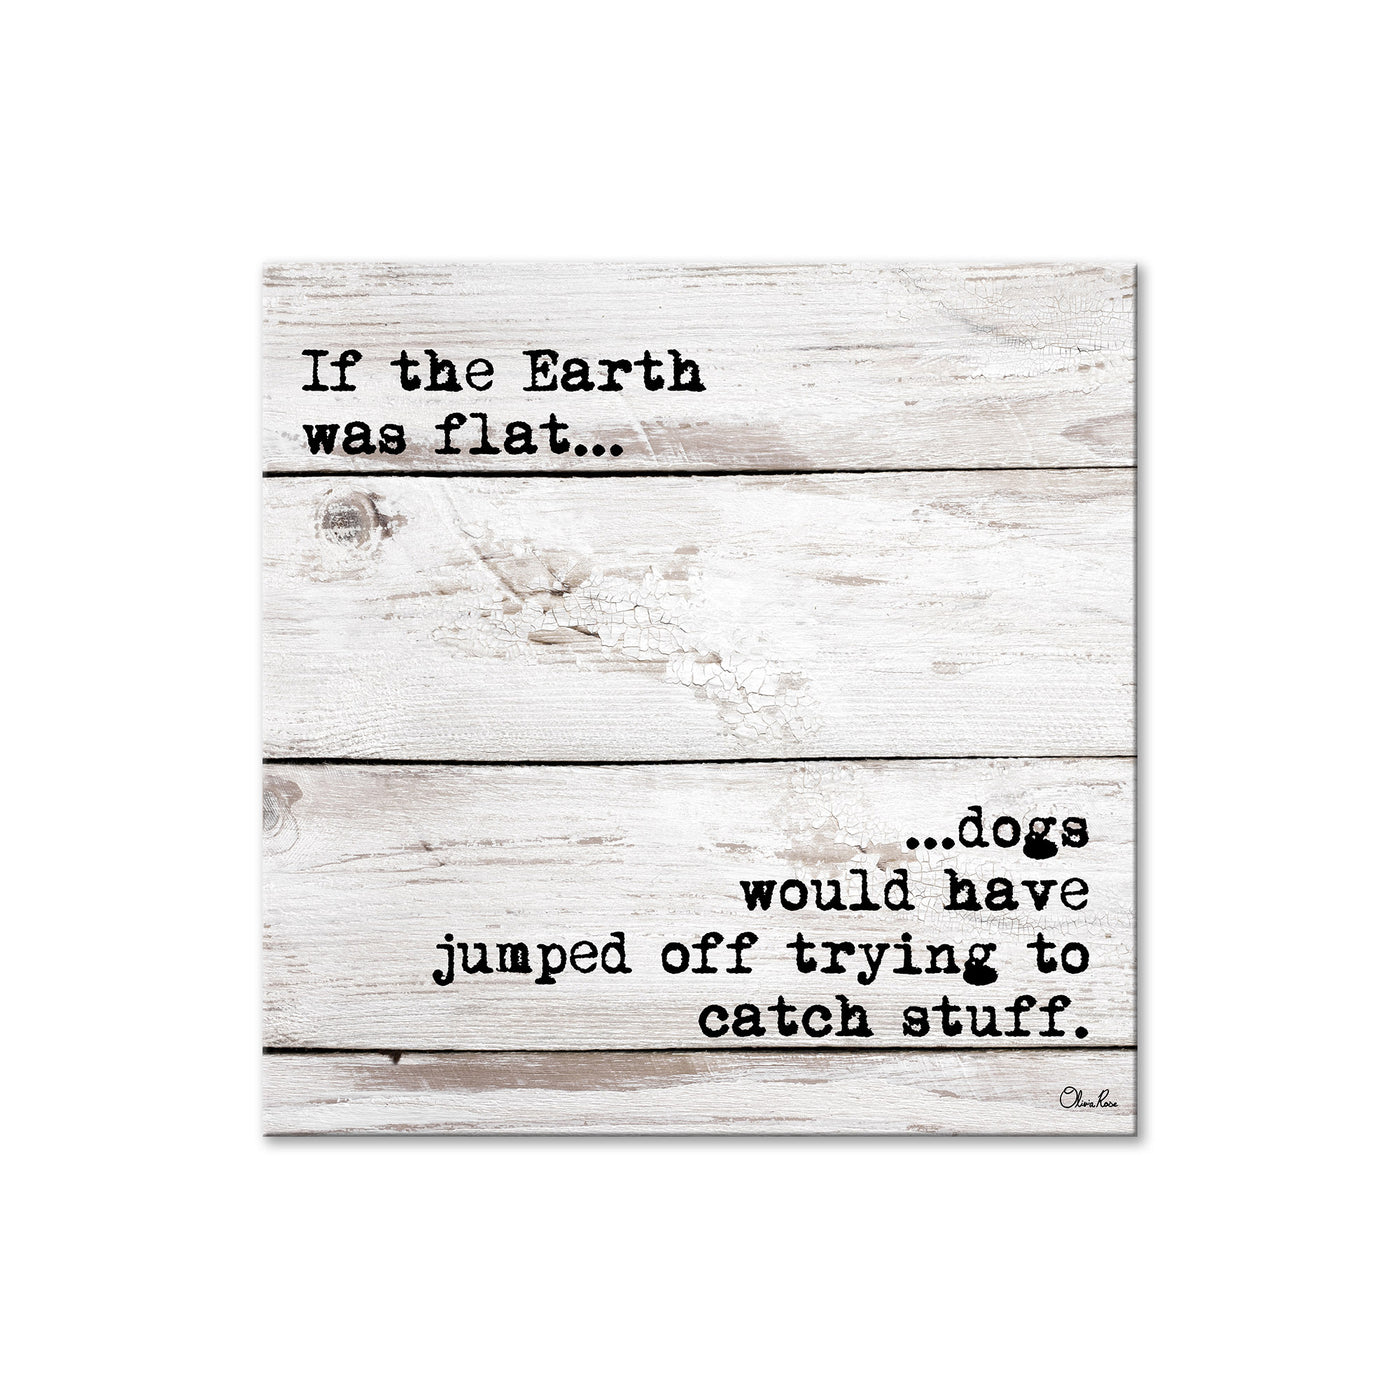 Flat Earth - Dog